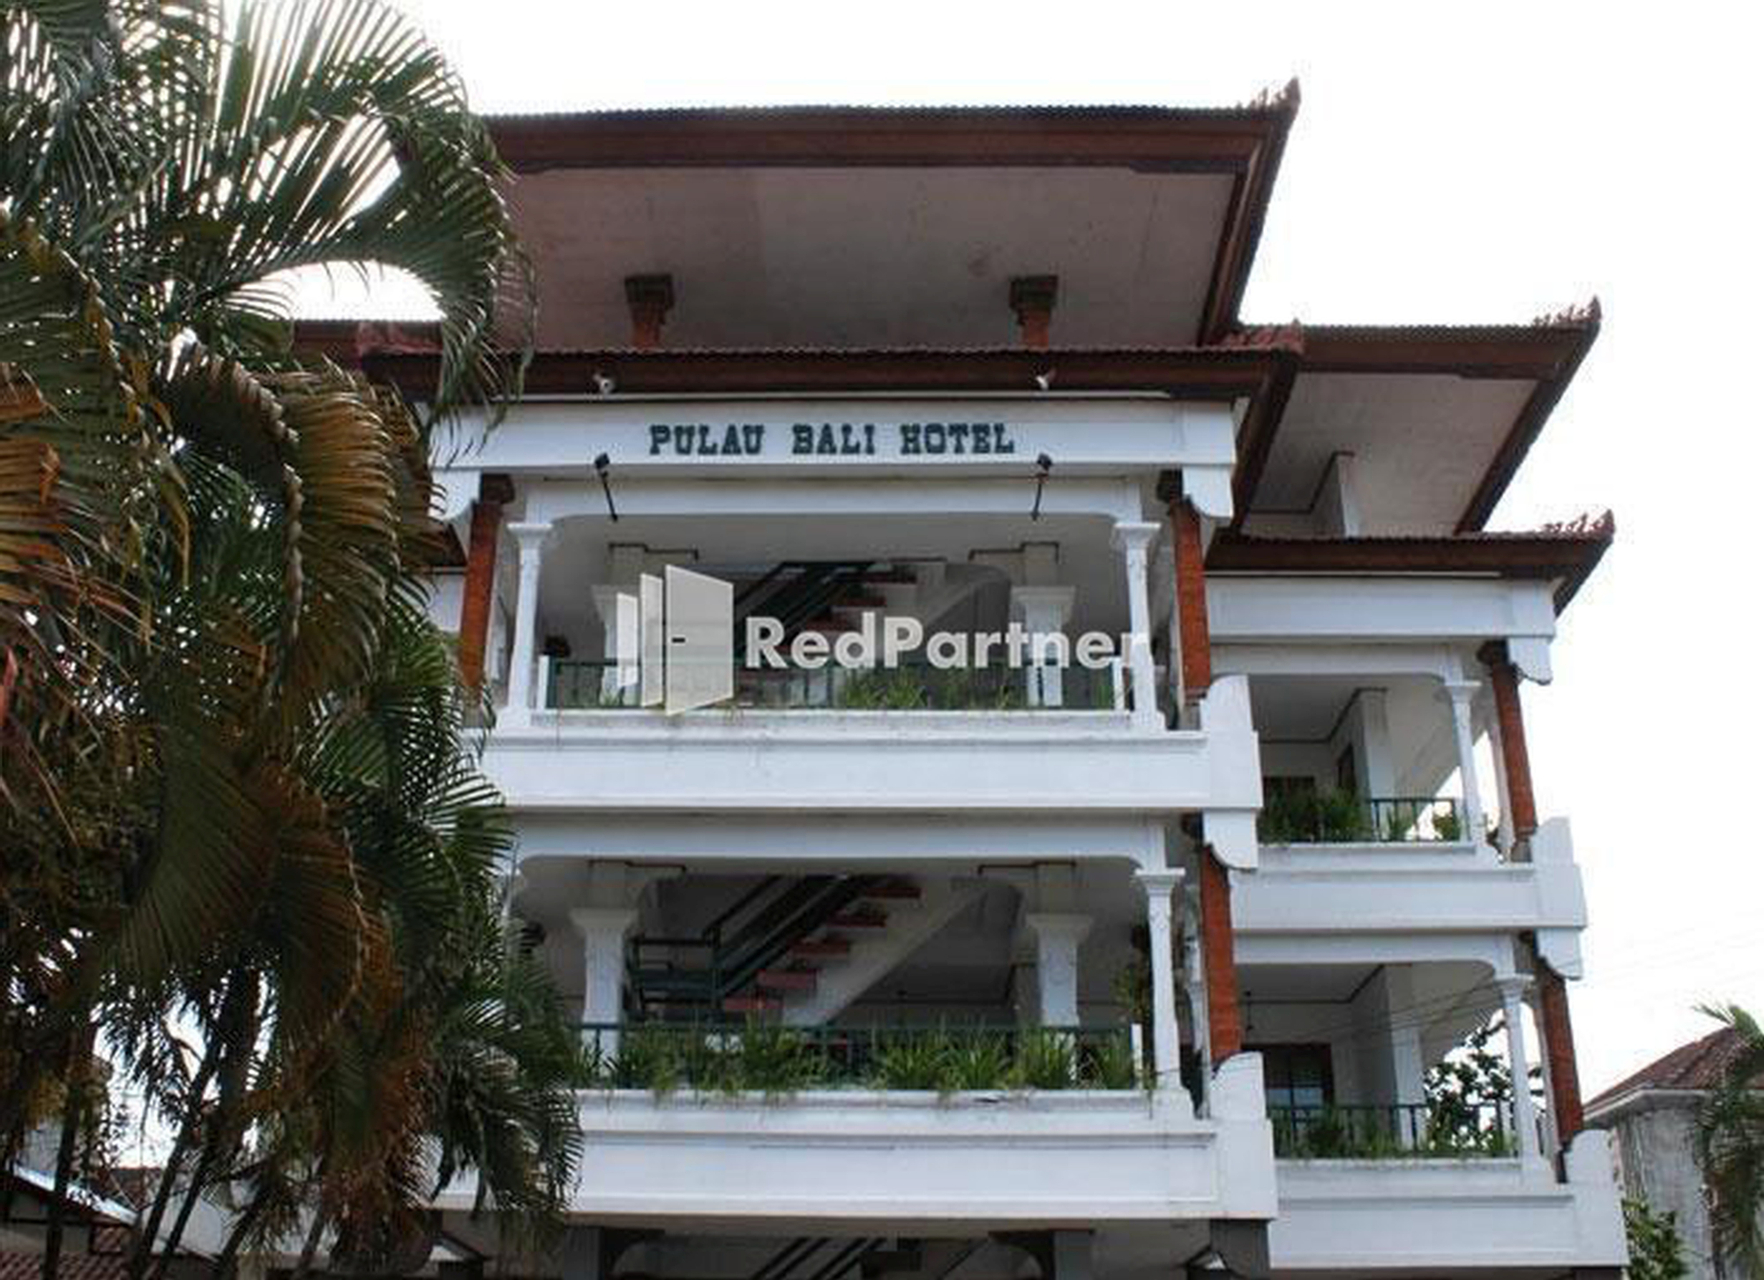 Pulau Bali Hotel RedPartner, Denpasar